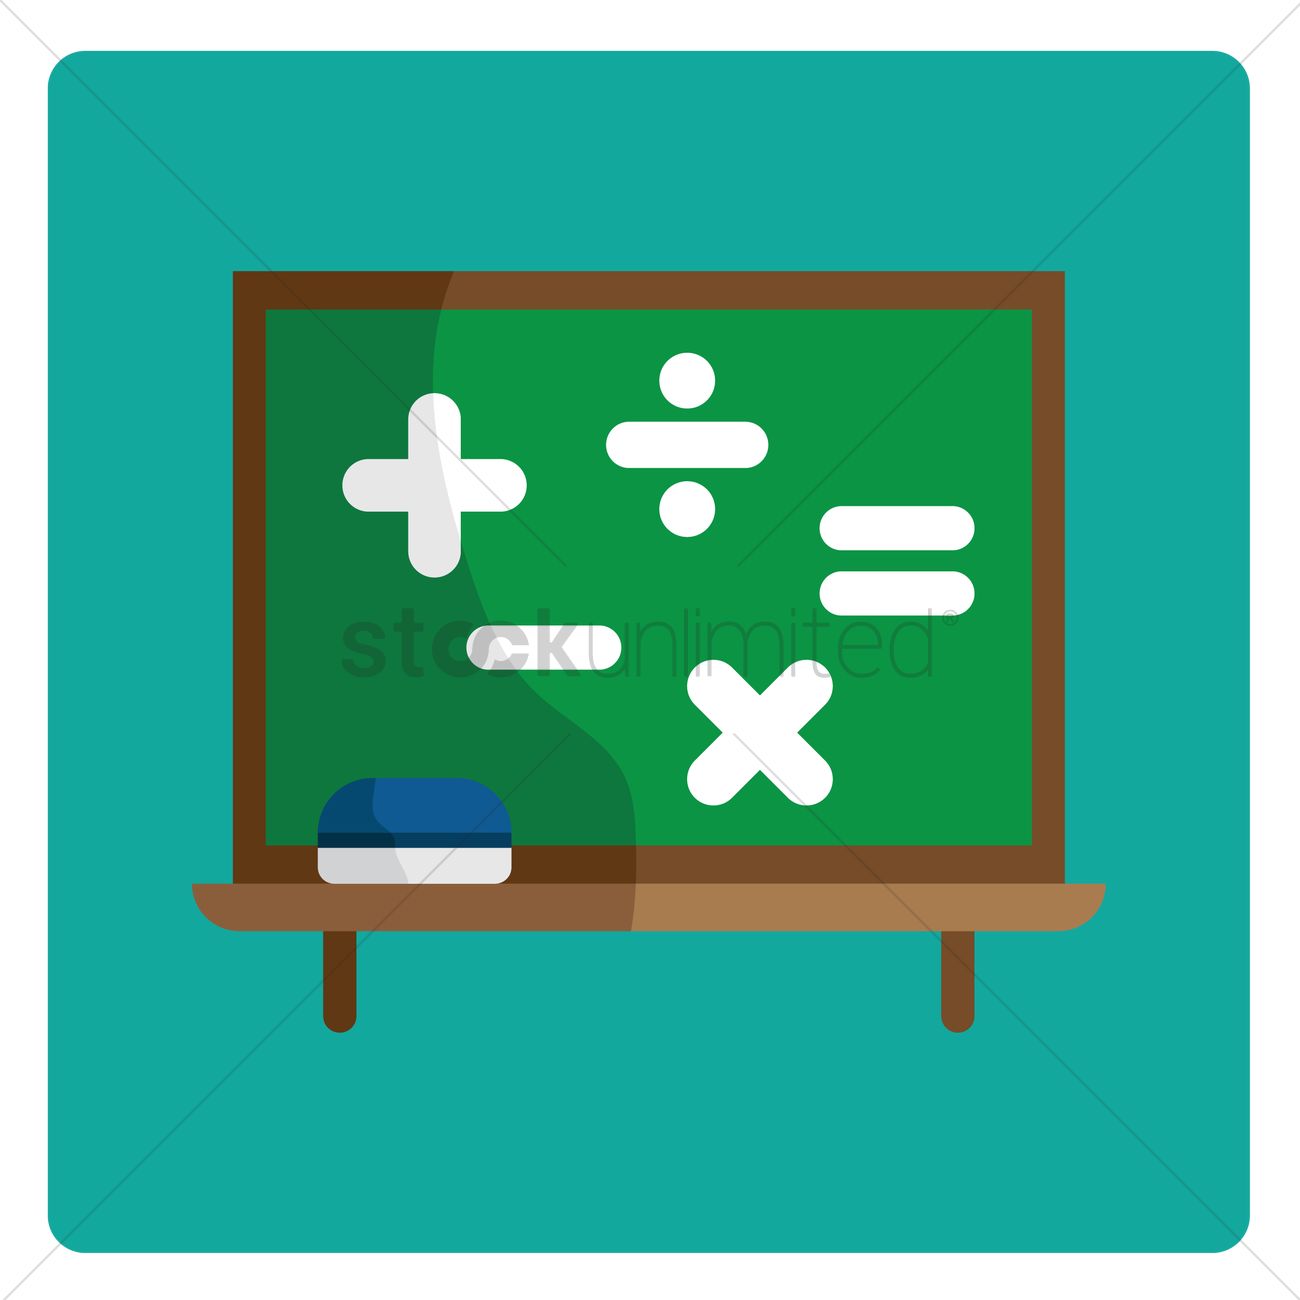 Mathematics equations chalkboard.